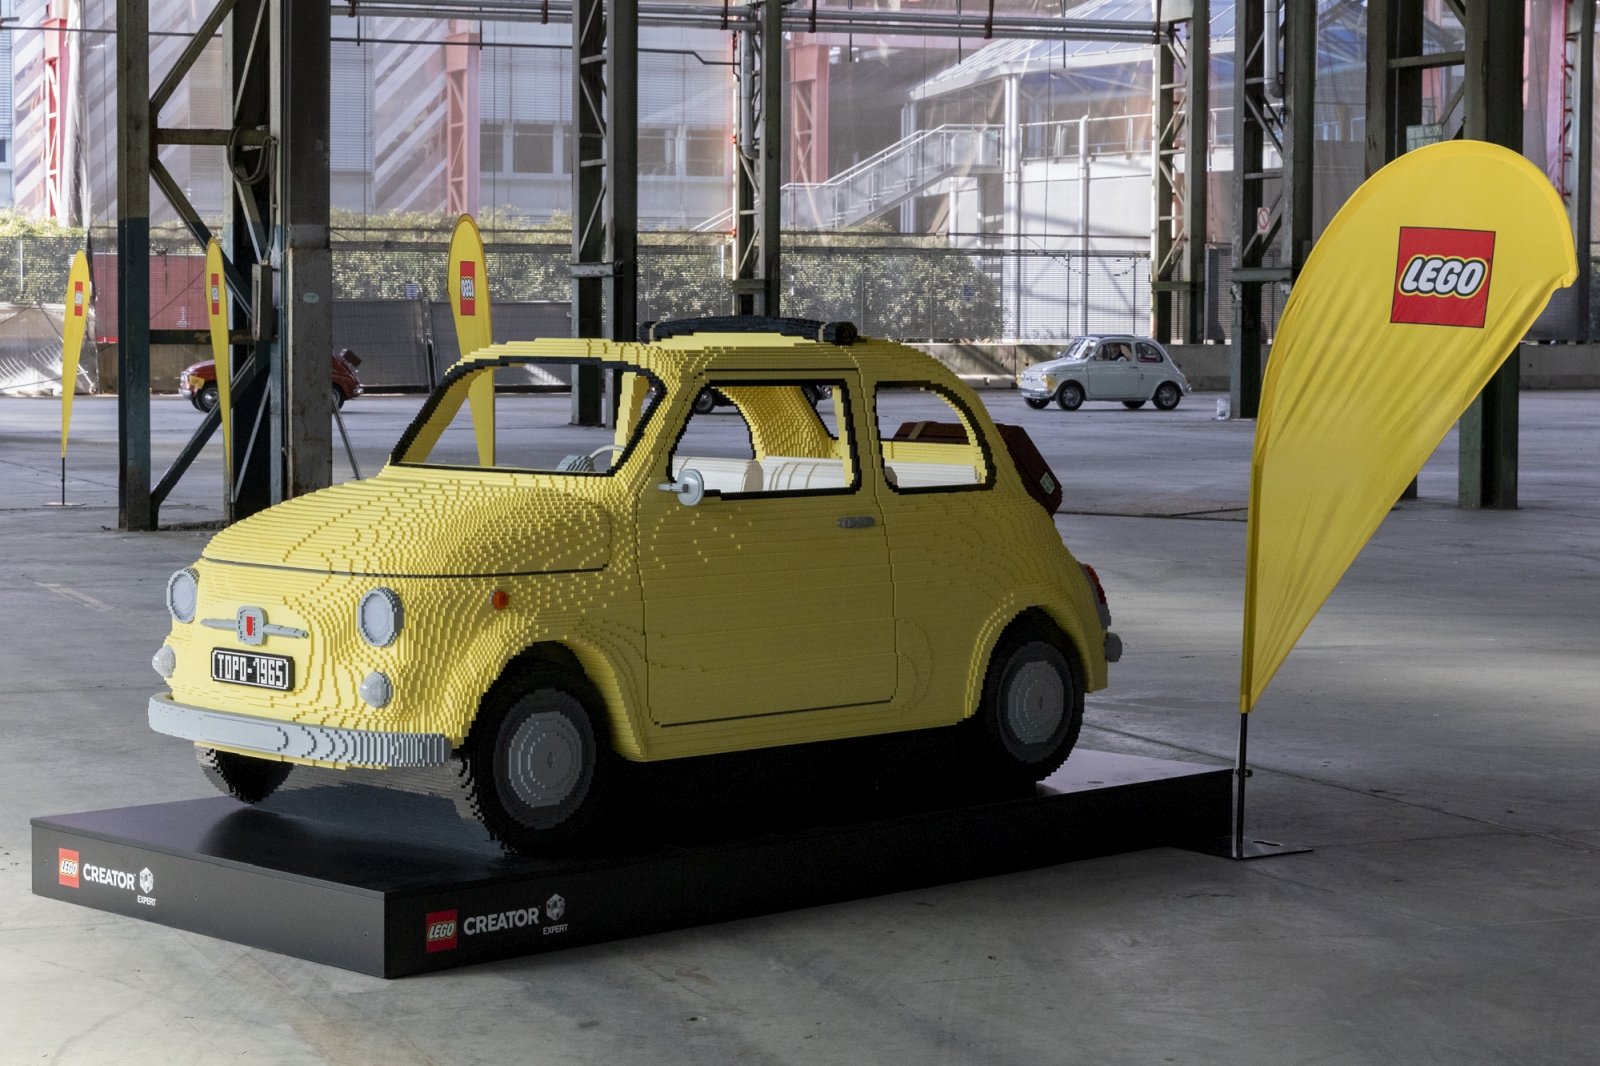 Swedish Enthusiast Constructs Life-Size Car from LEGO Bricks